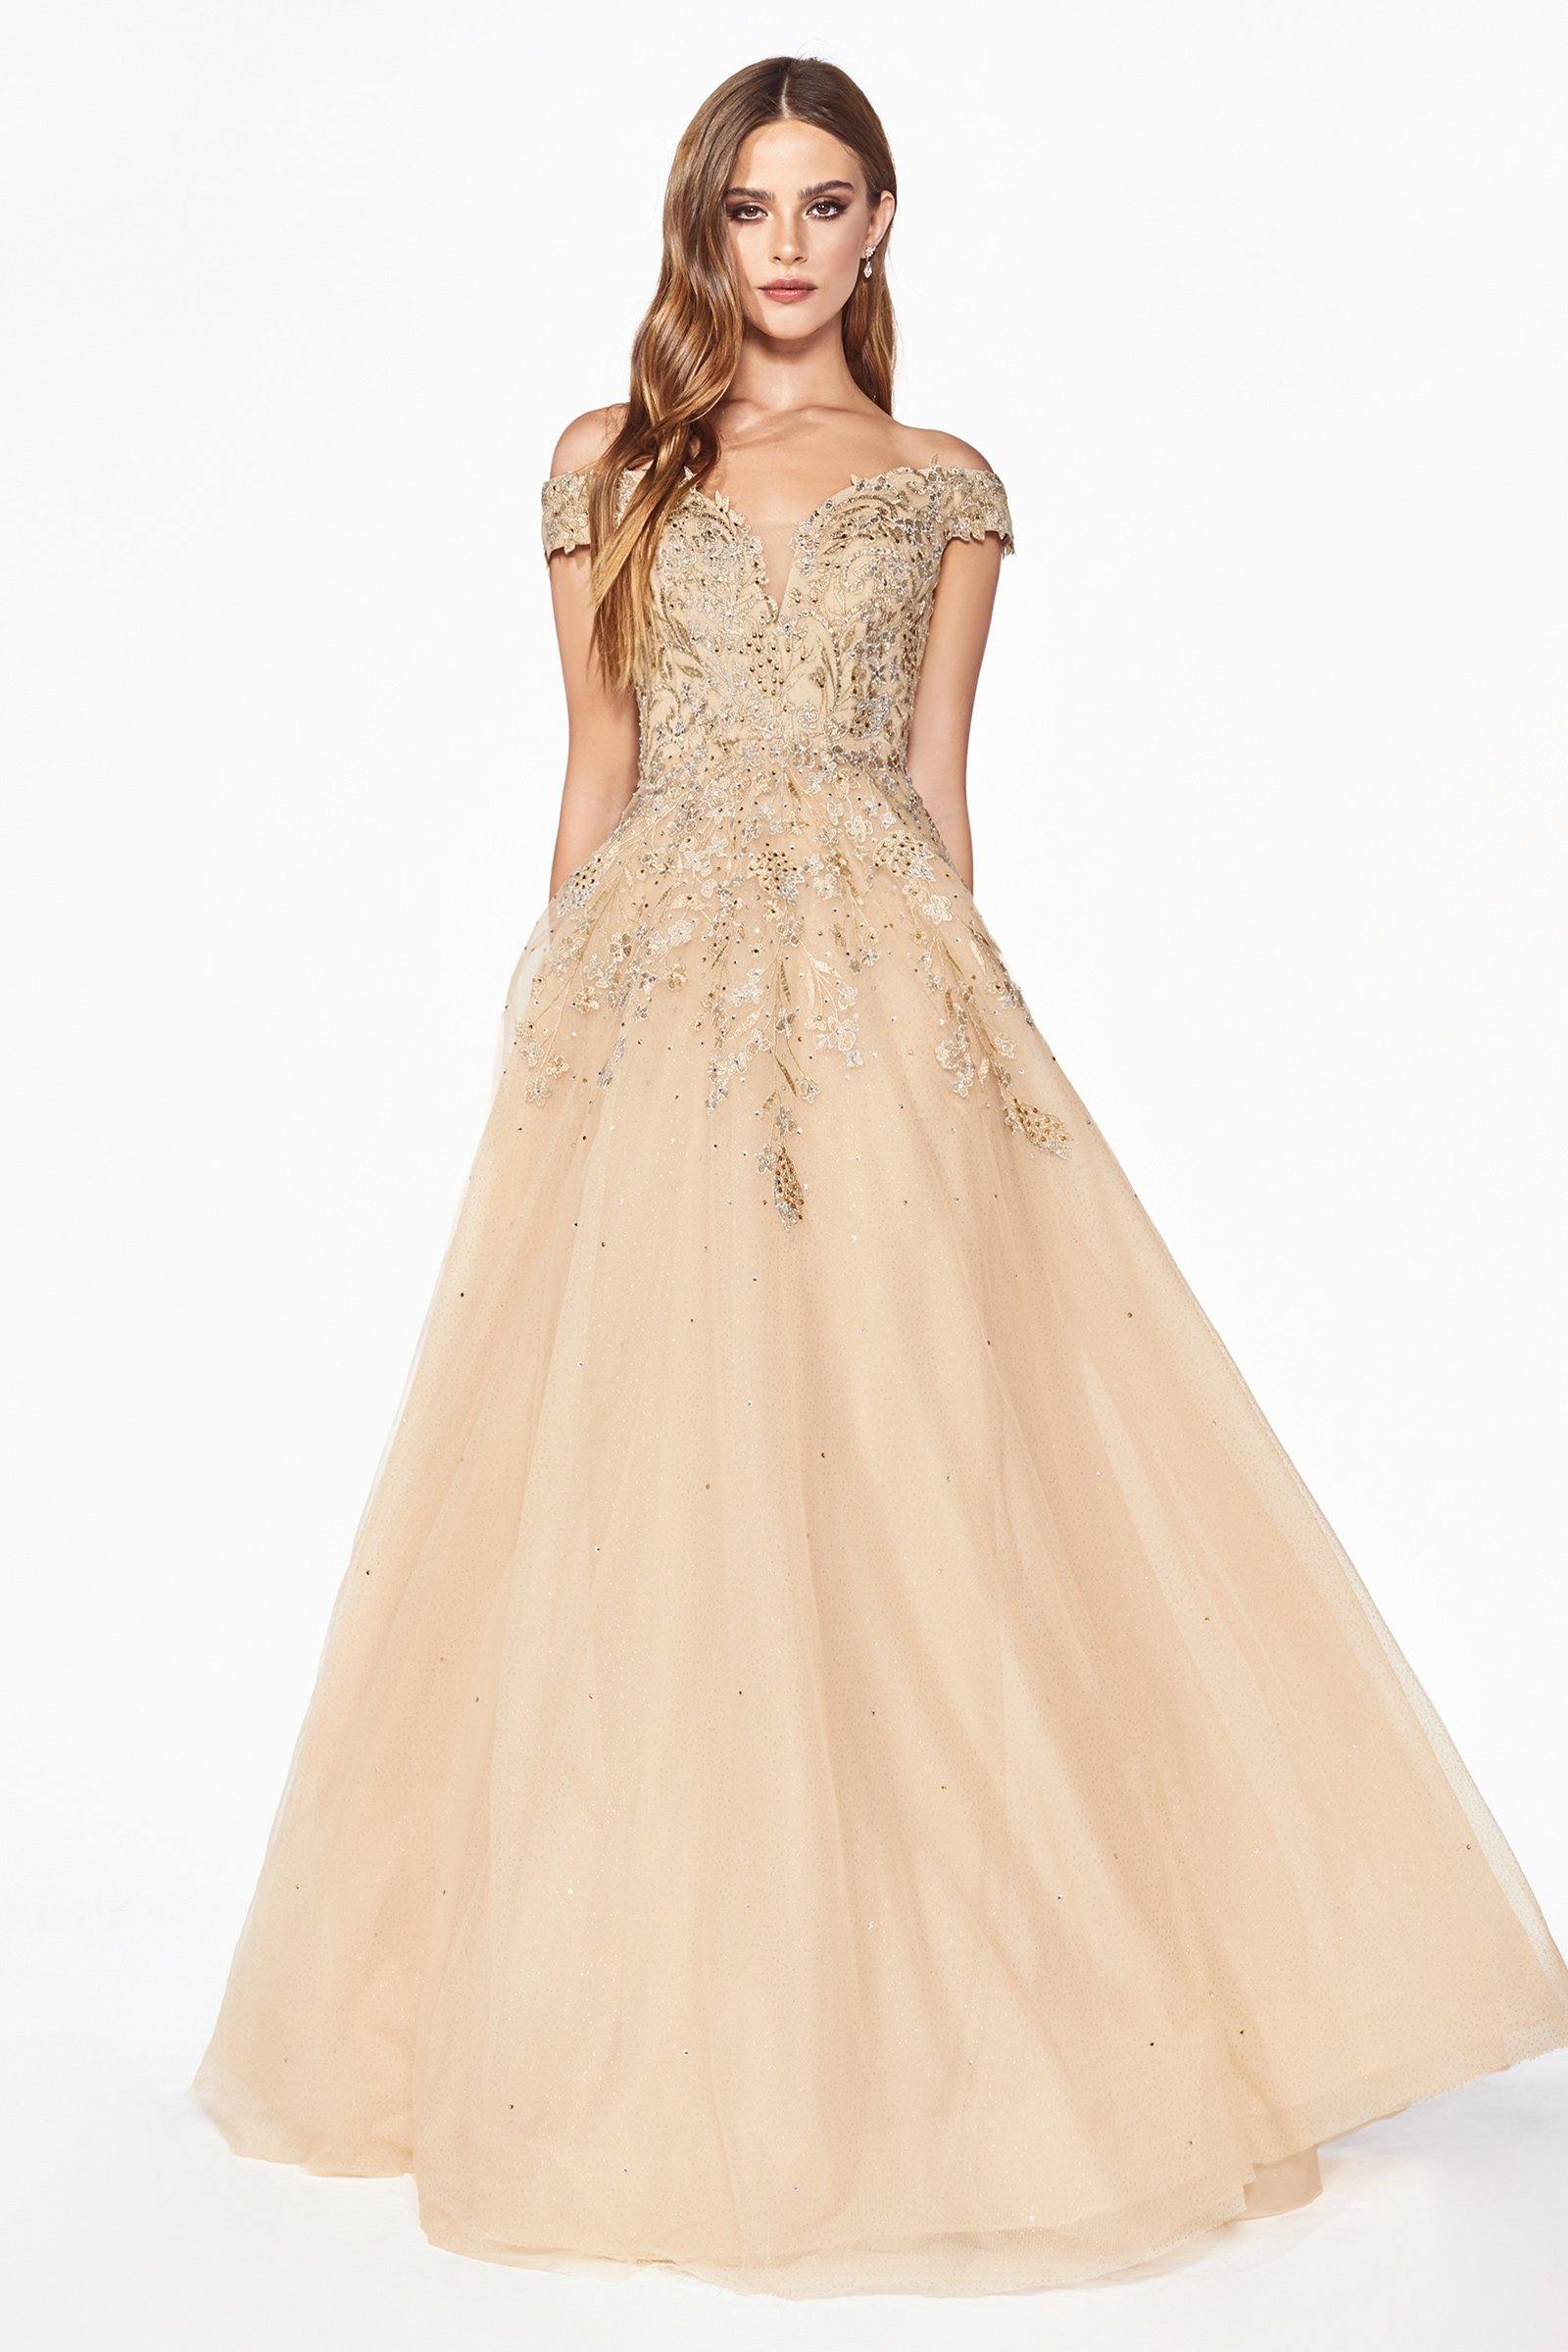 Prom Long Formal Off Shoulder Ball Gown - The Dress Outlet Cinderella Divine